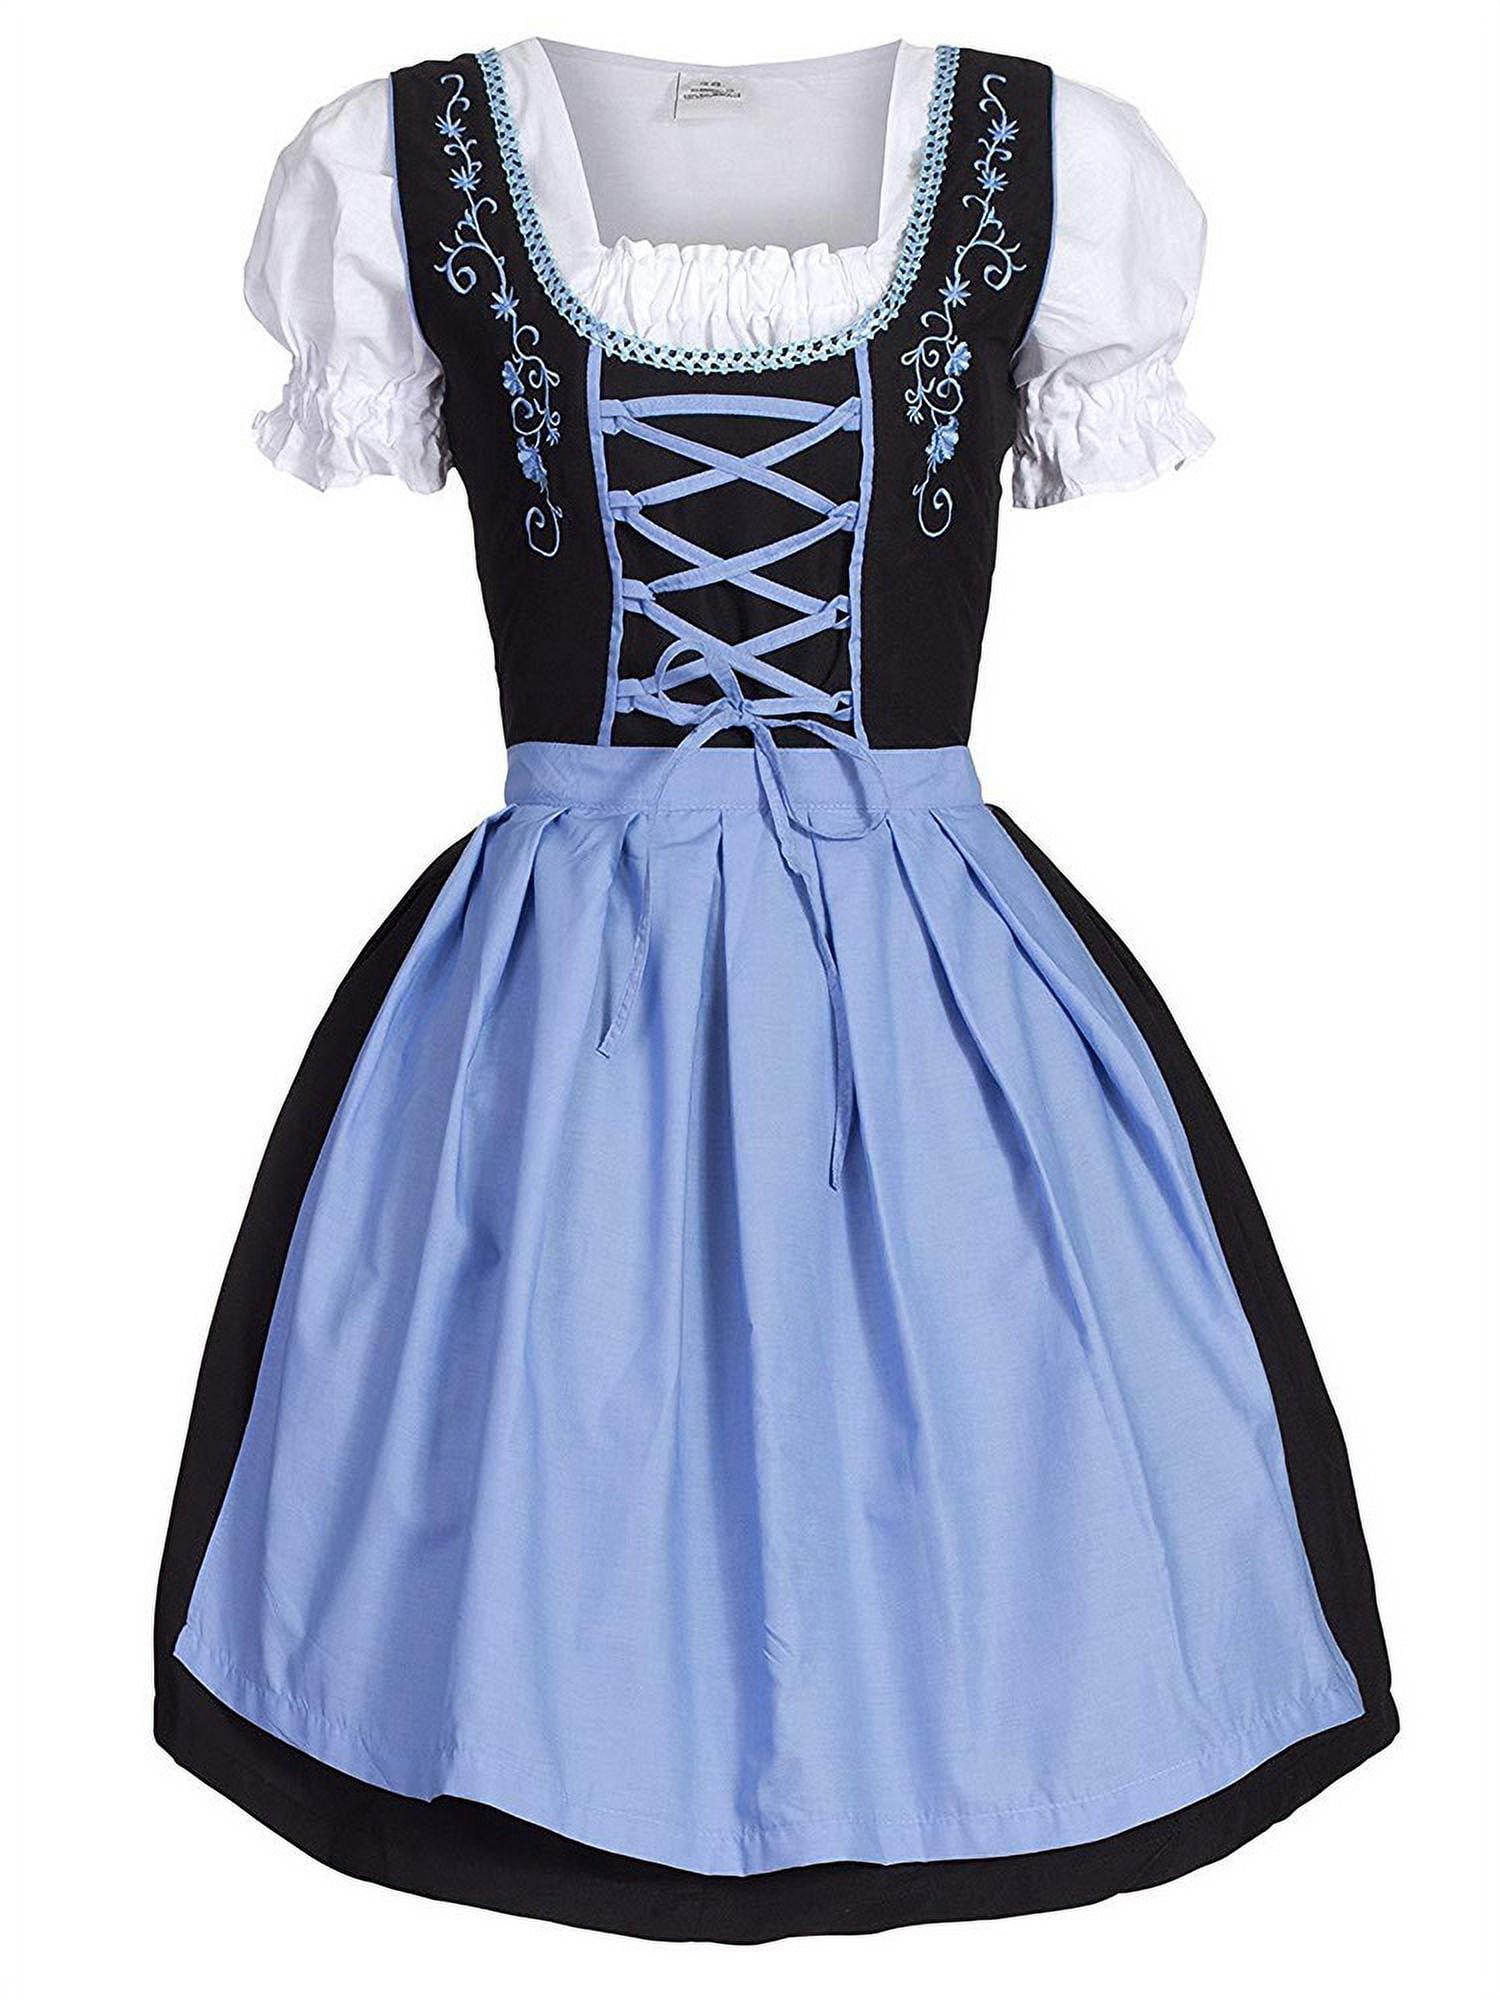 4 Pieces Women's German Dirndl Dress Costumes for Bavarian Oktoberfest ...